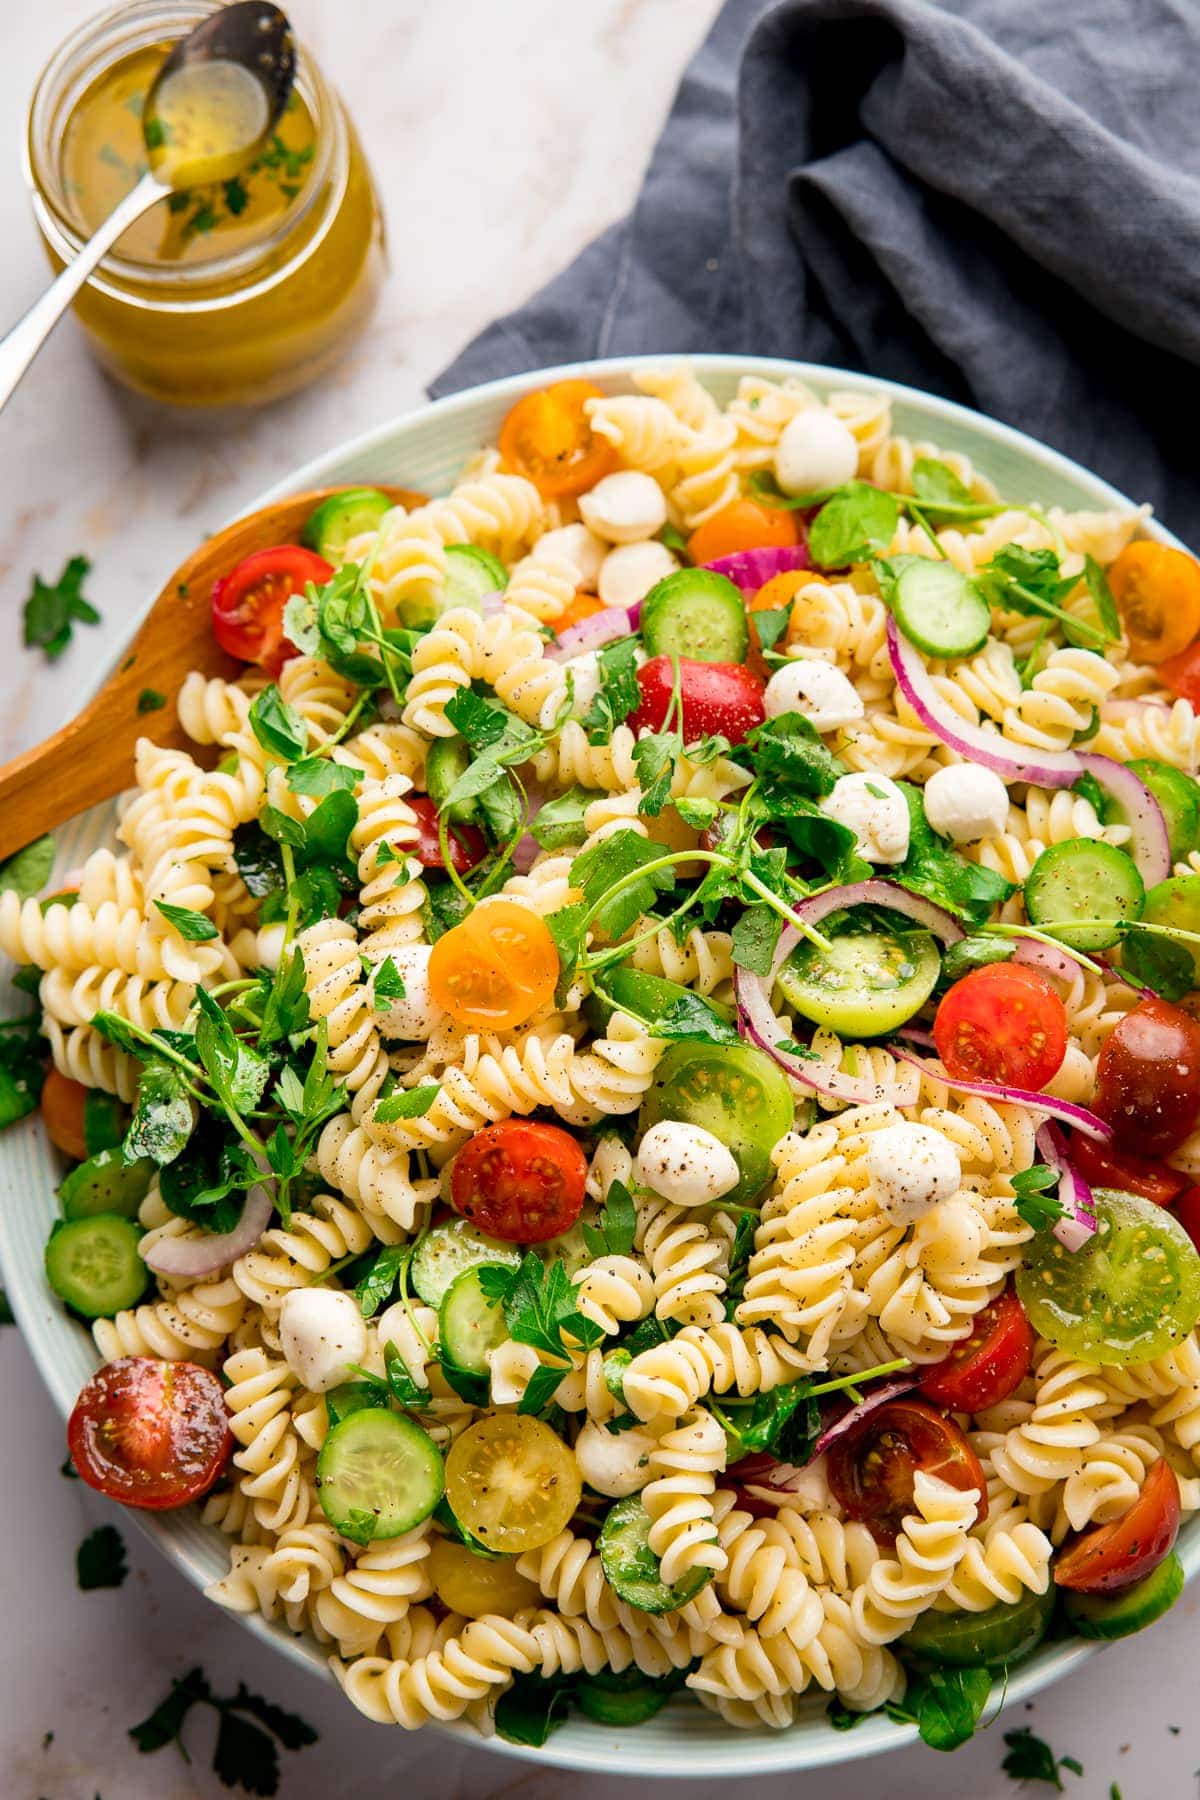 easy tasty pasta salad recipes Pasta salad easy delicious heart salads ...